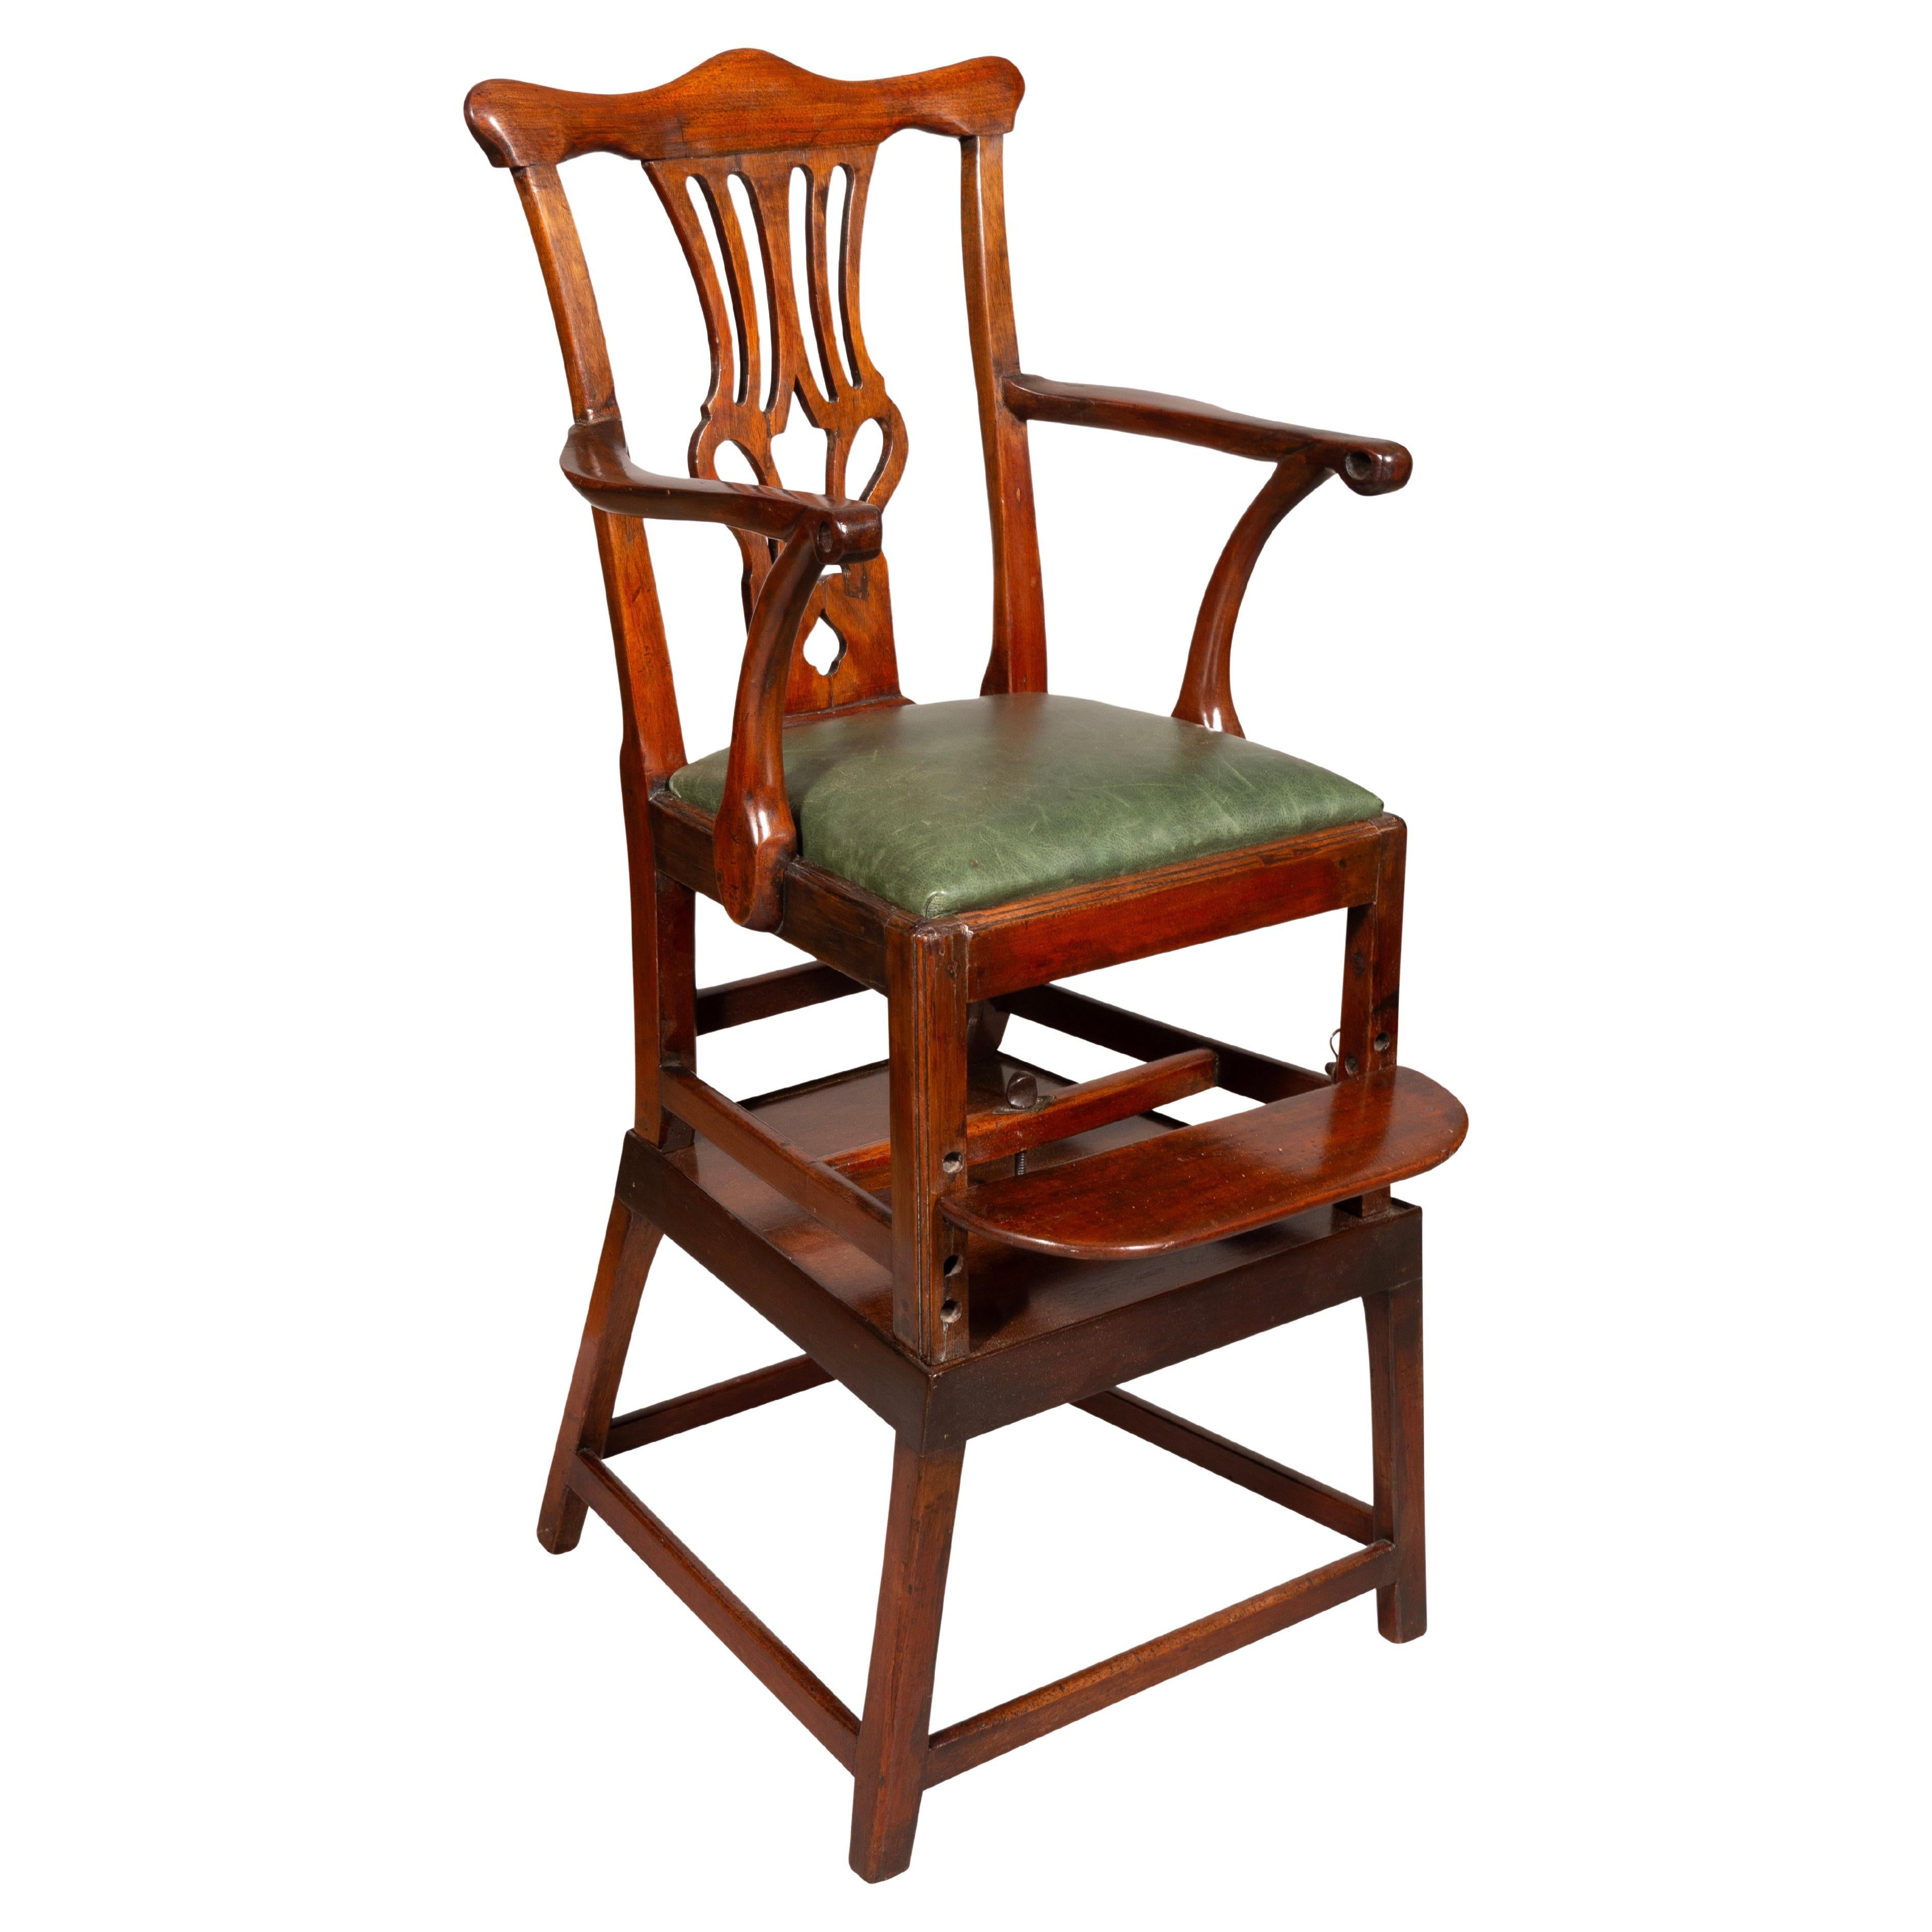 George III Mahogany Childs High Chair